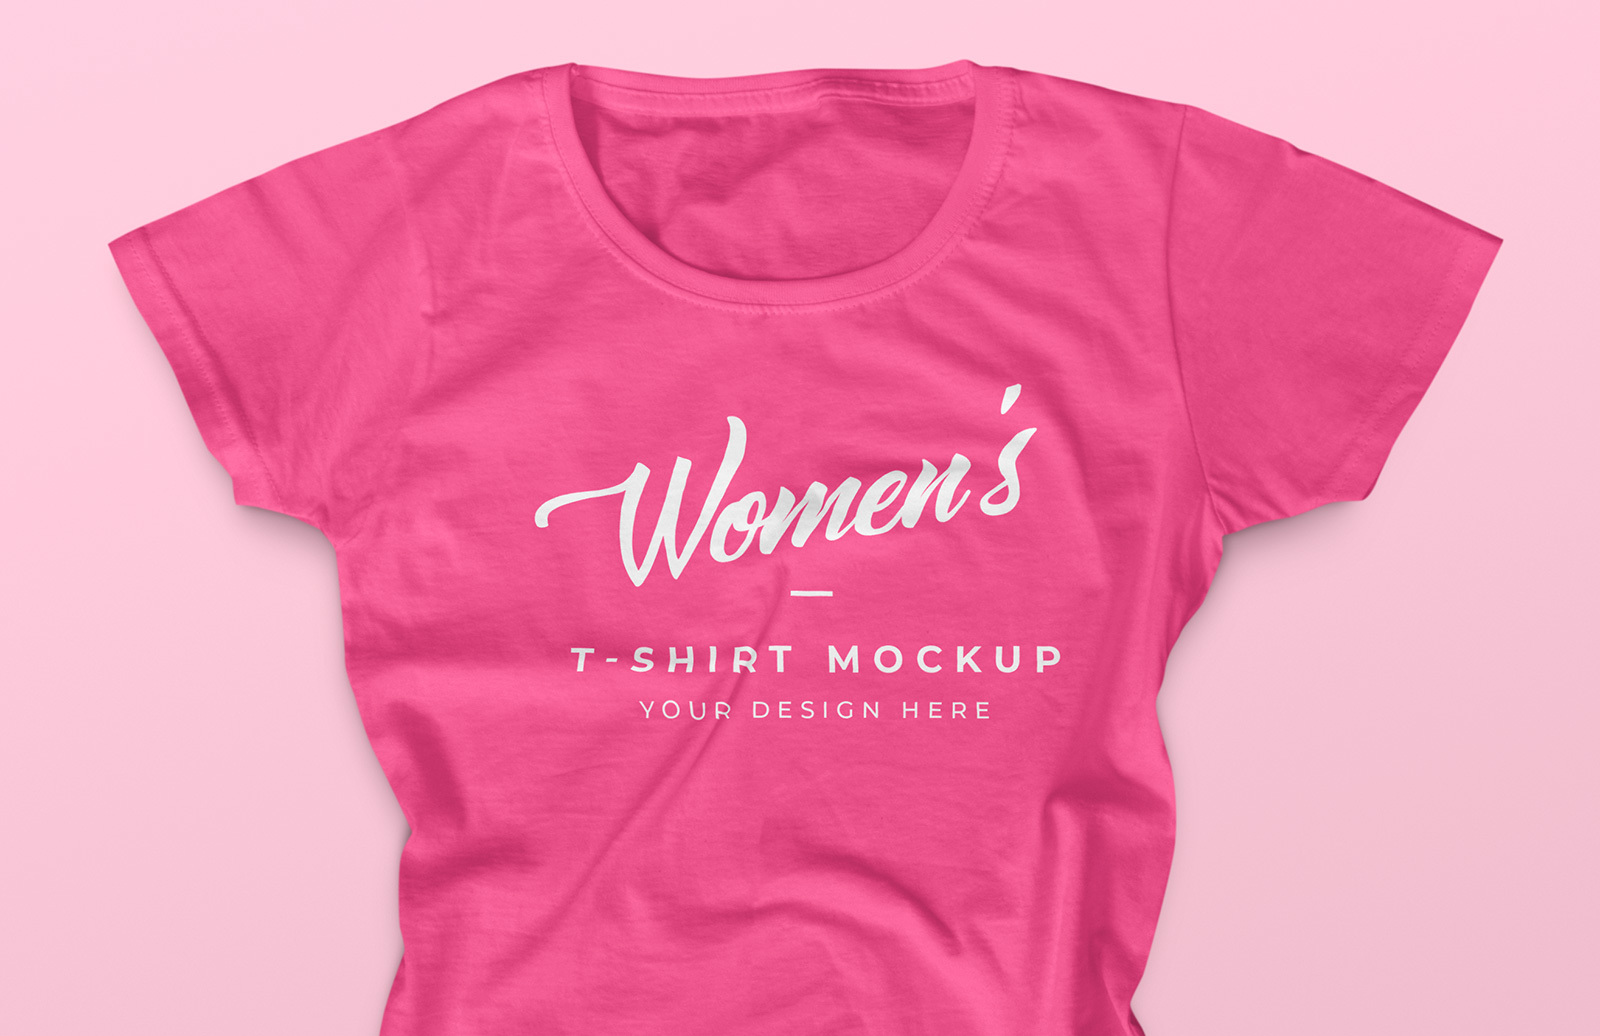 Download Free Women S T Shirt Mockup Medialoot